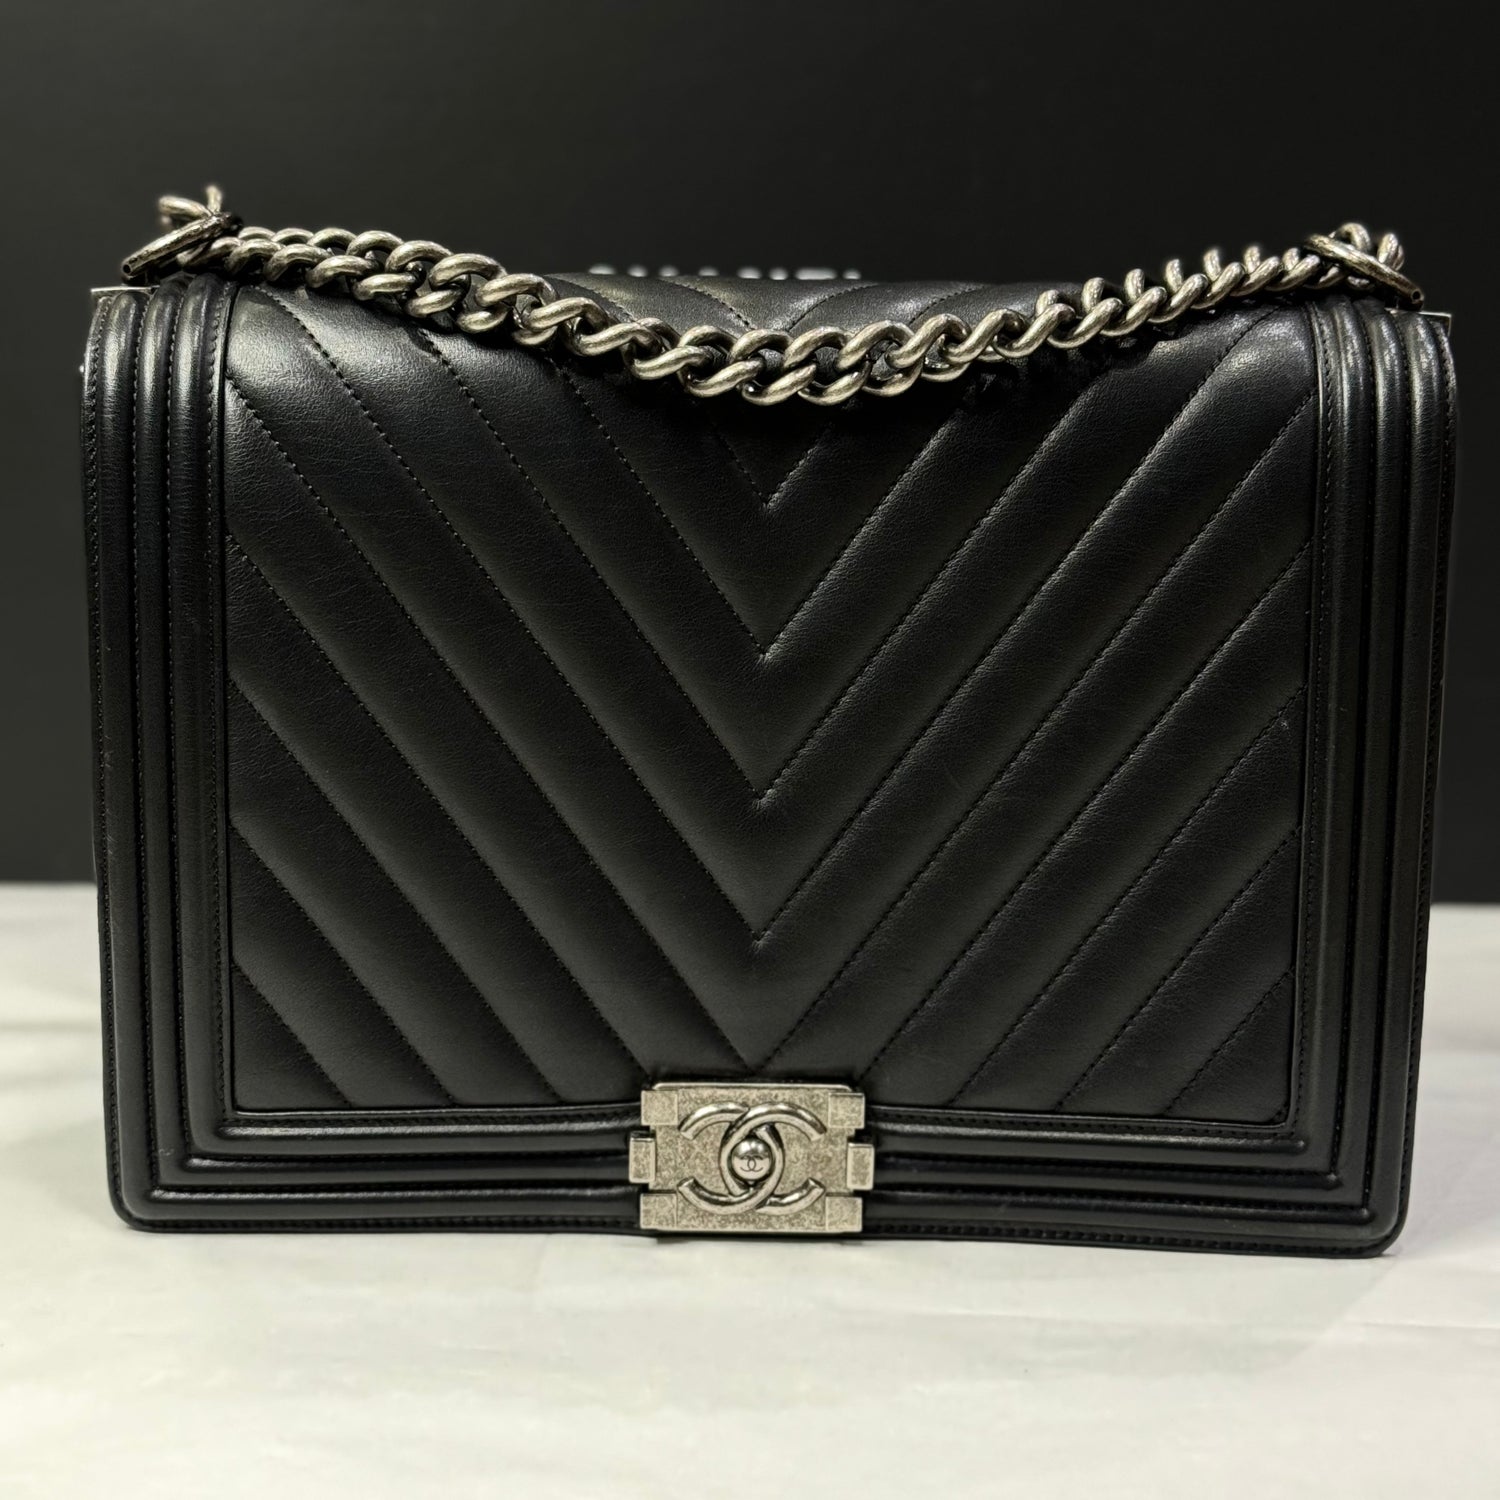 Chanel - Black chevron Maxi Boy bag